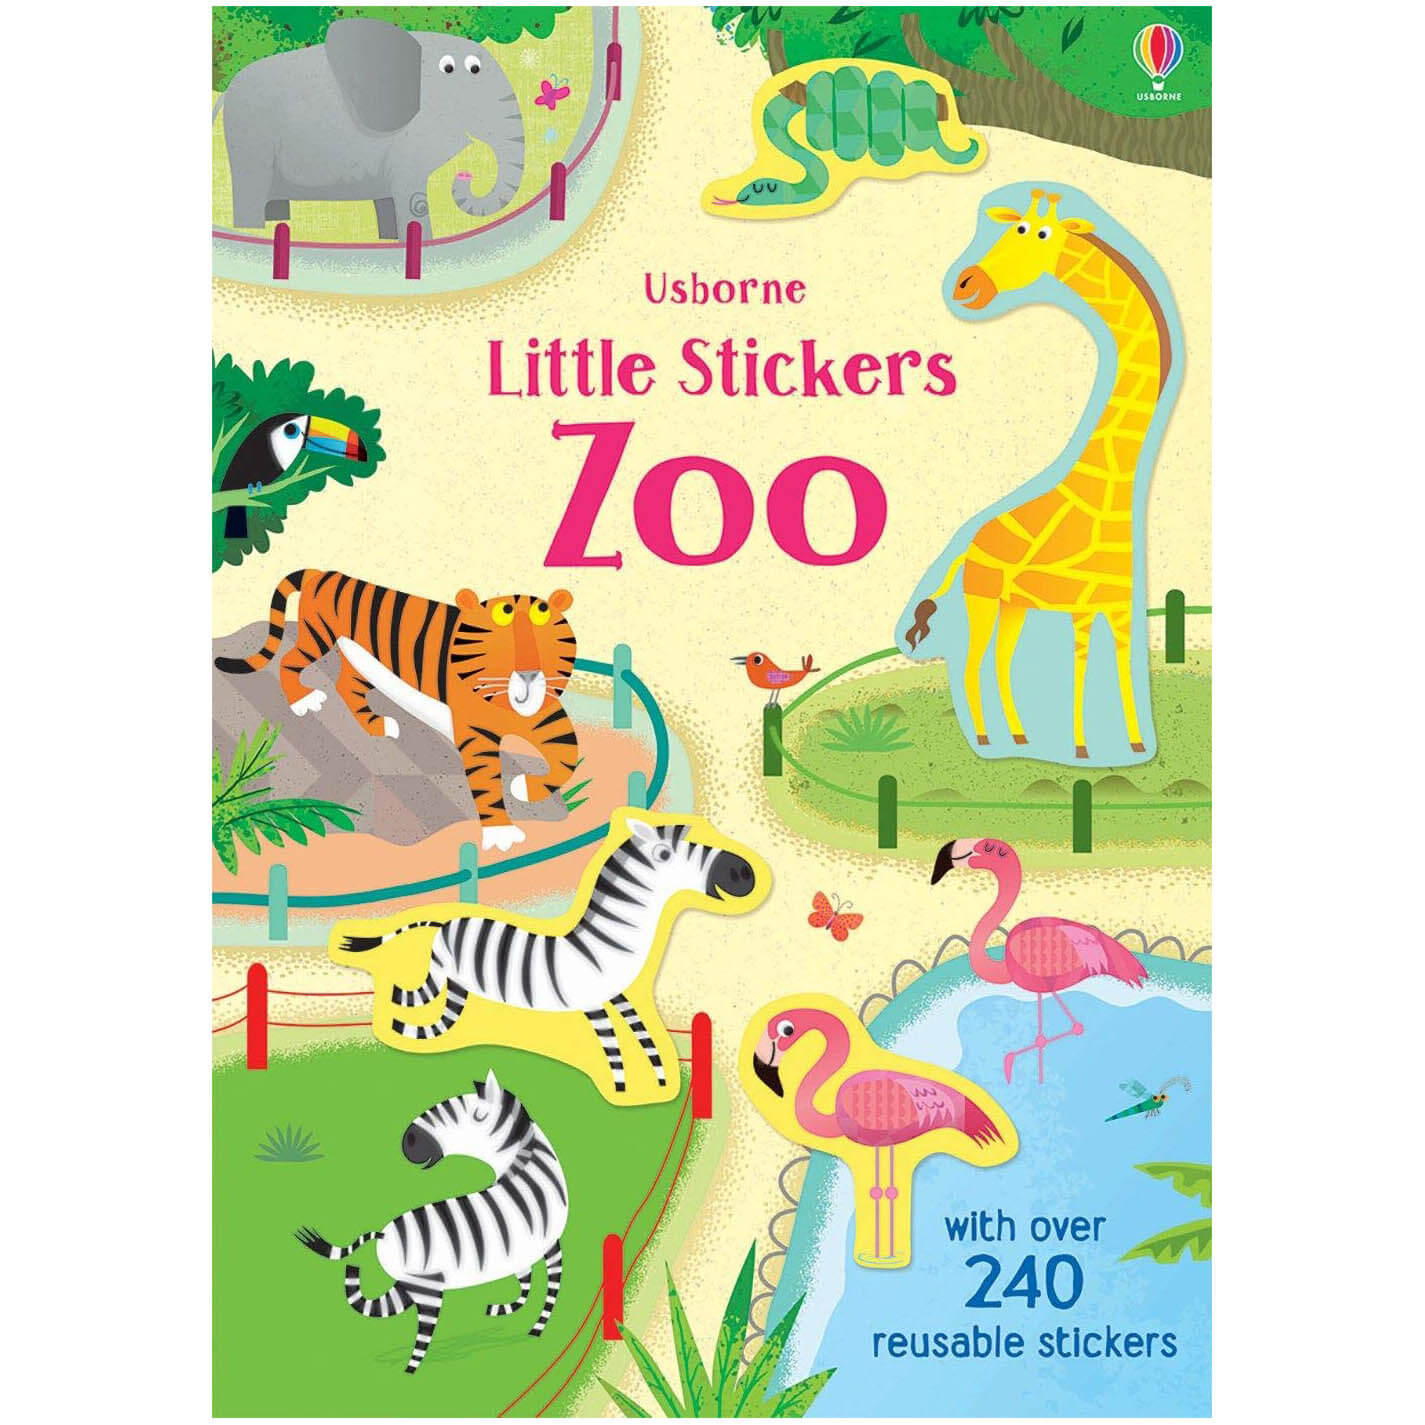 Usborne Little Stickers Zoo (Little Stickers Books)